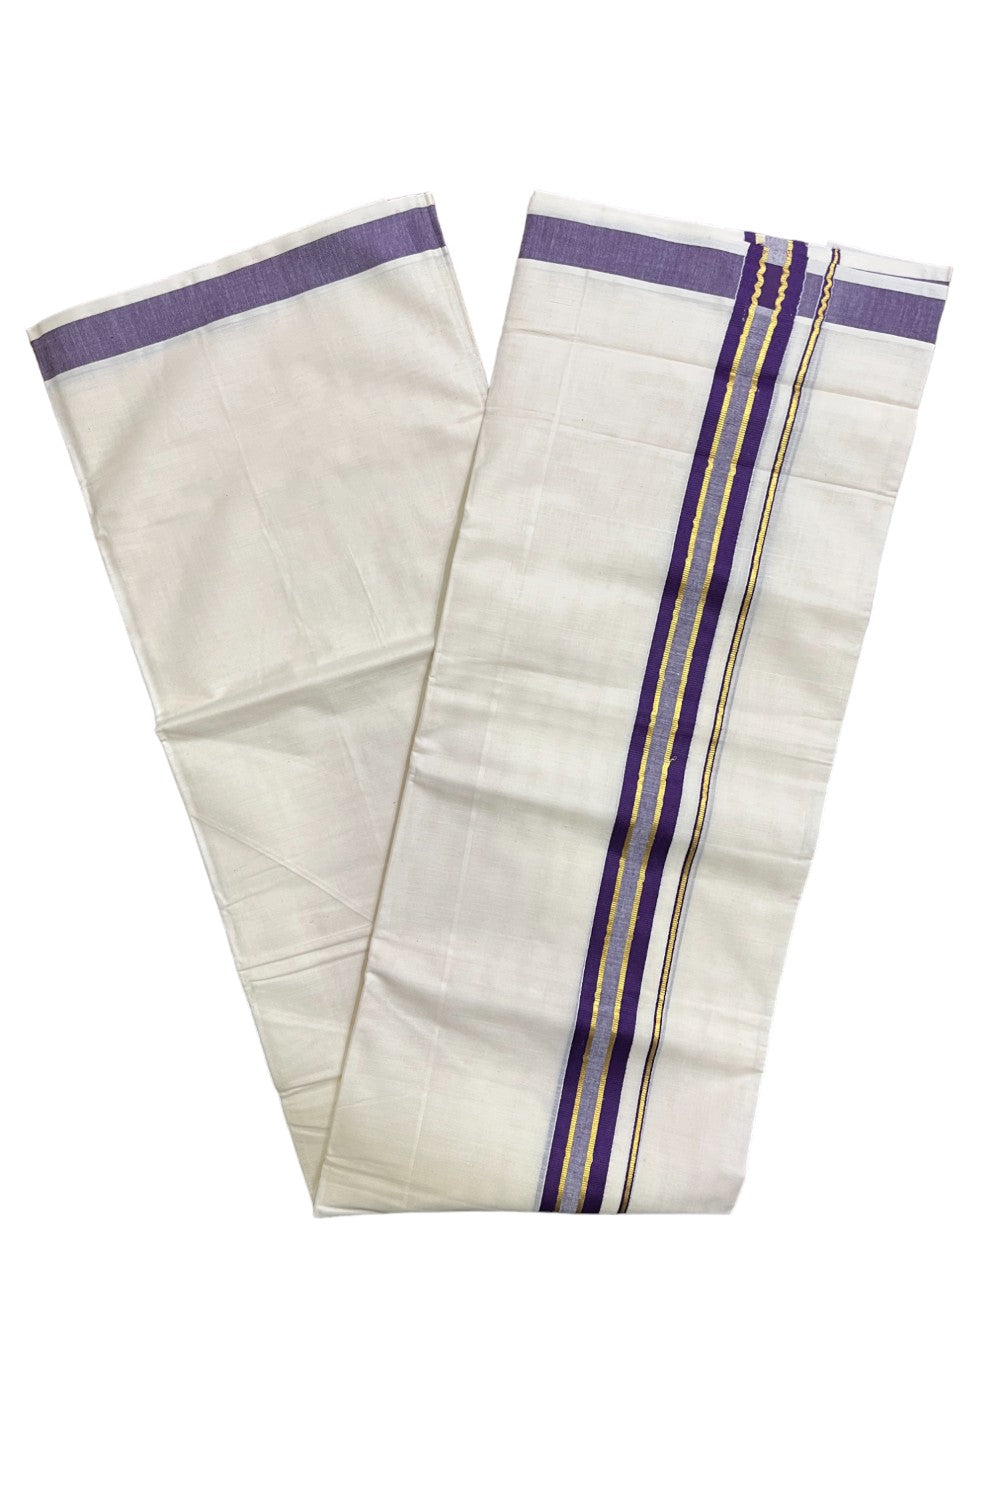 Kerala Pure Cotton Double Mundu with Kasavu Violet Border (South Indian Kerala Dhoti)